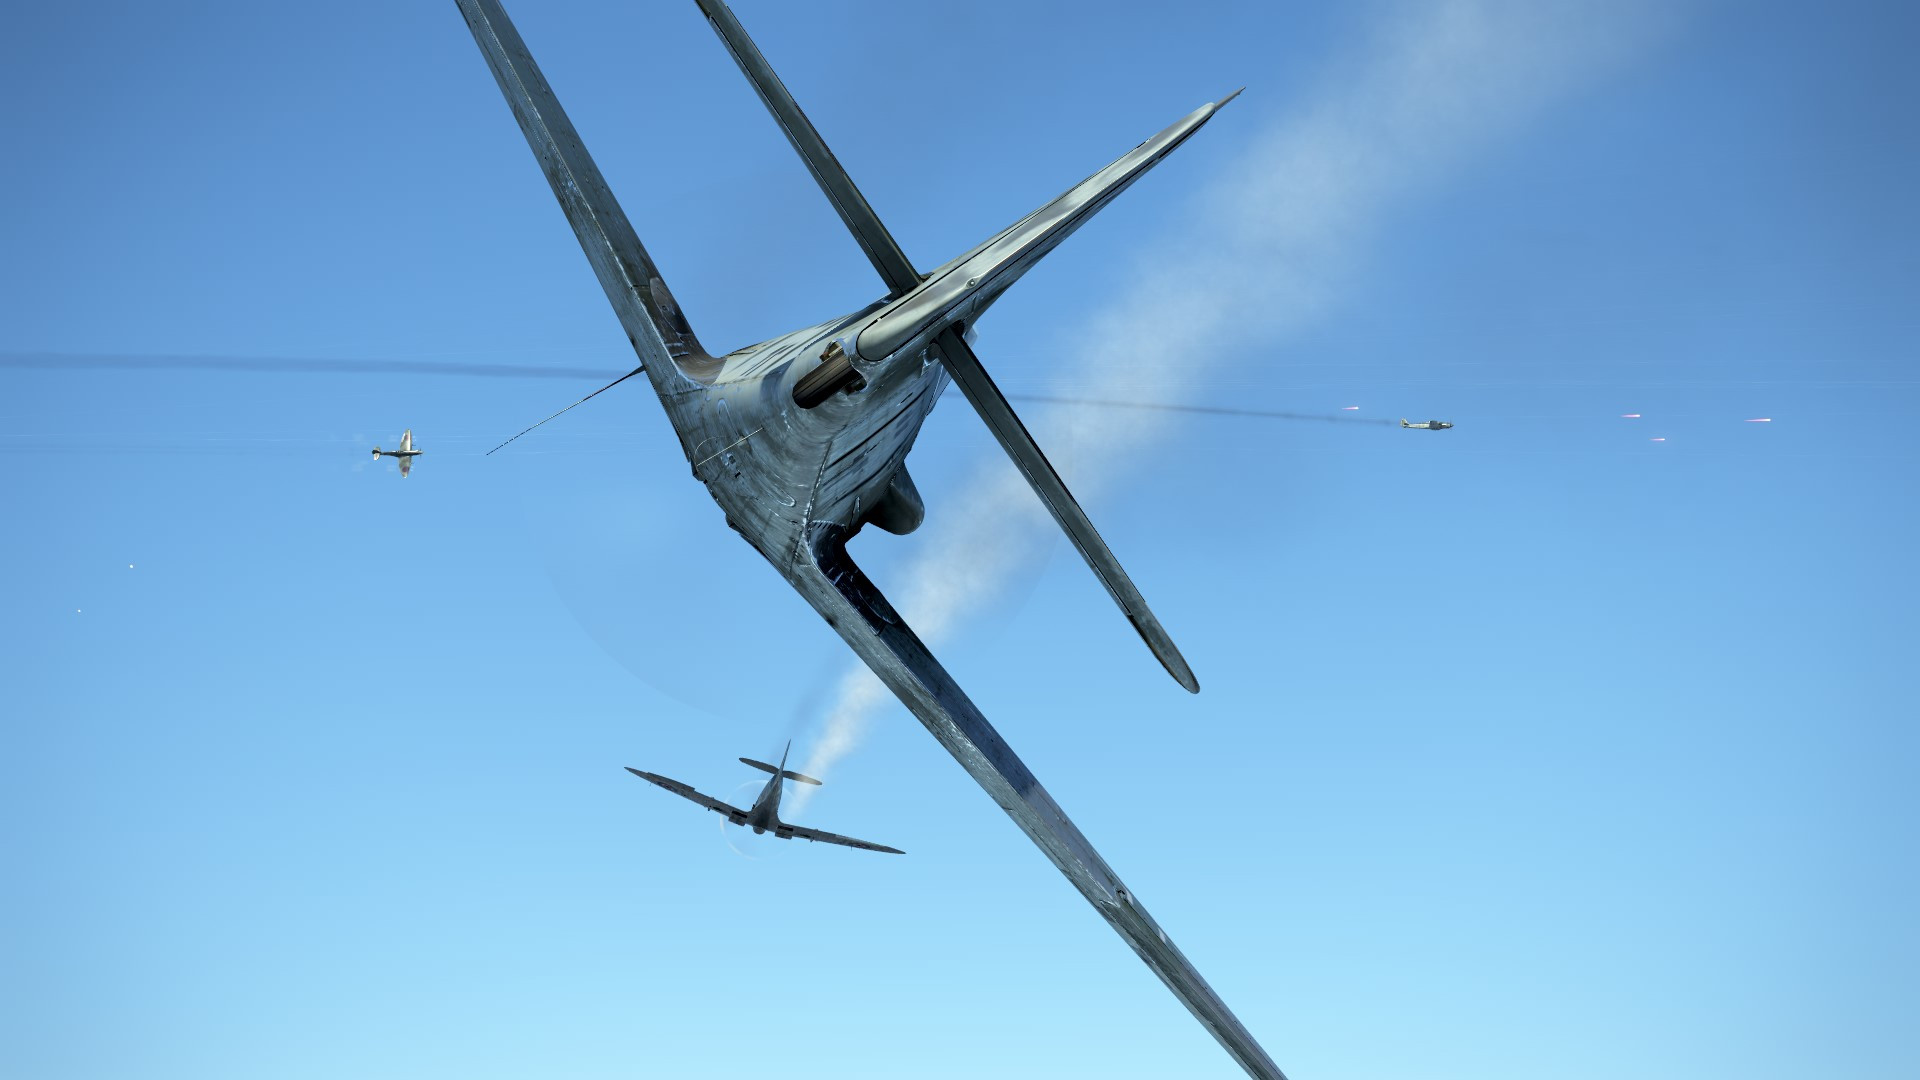 5 Best Flight Games to Play After Flight Simulator 